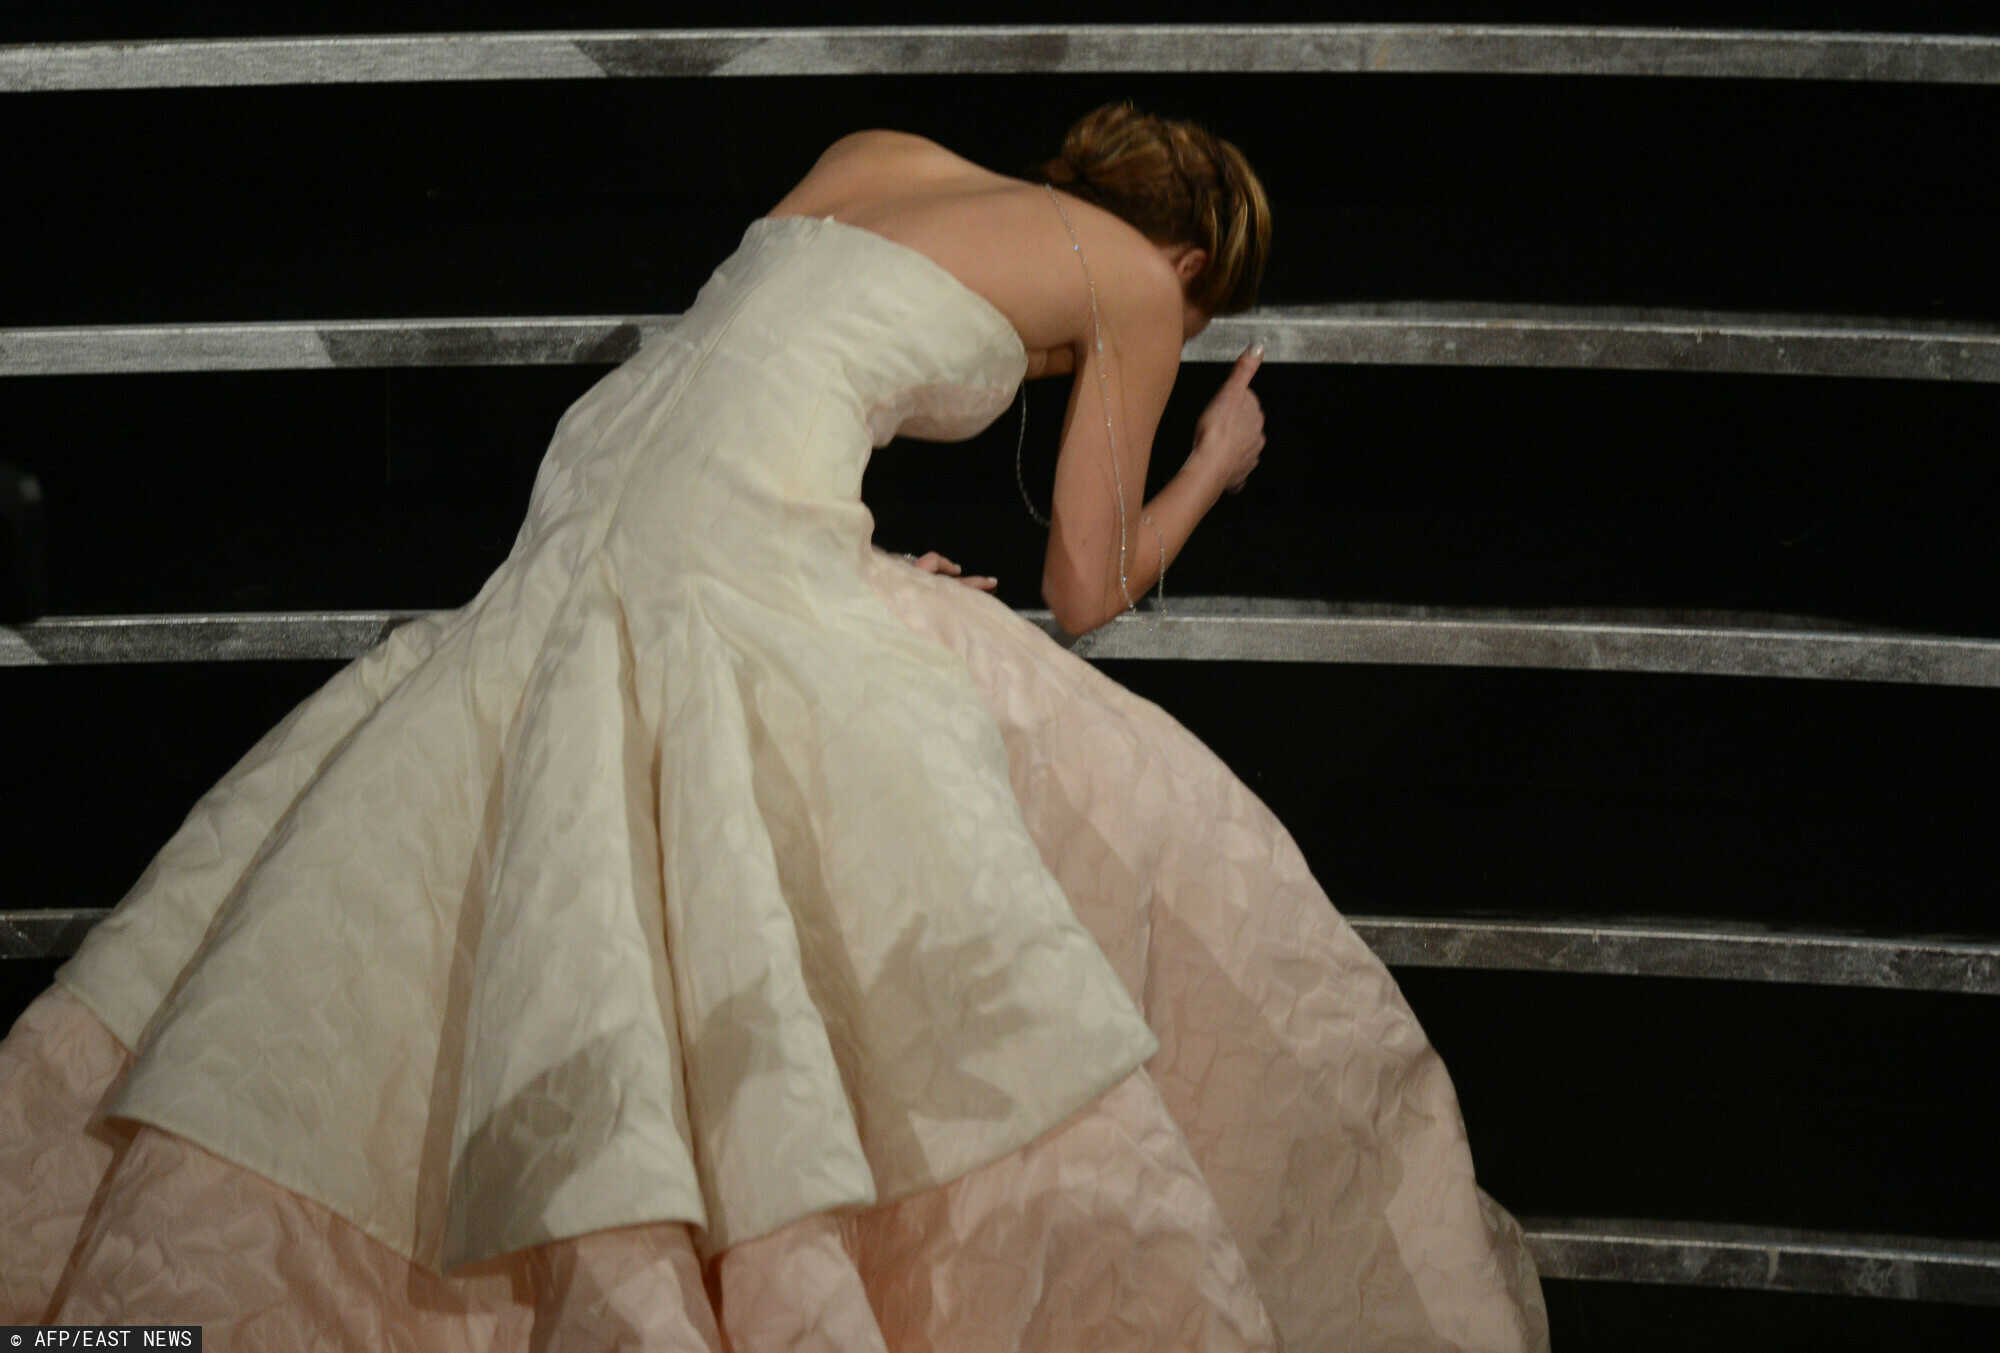 Jennifer Lawrence.jpg